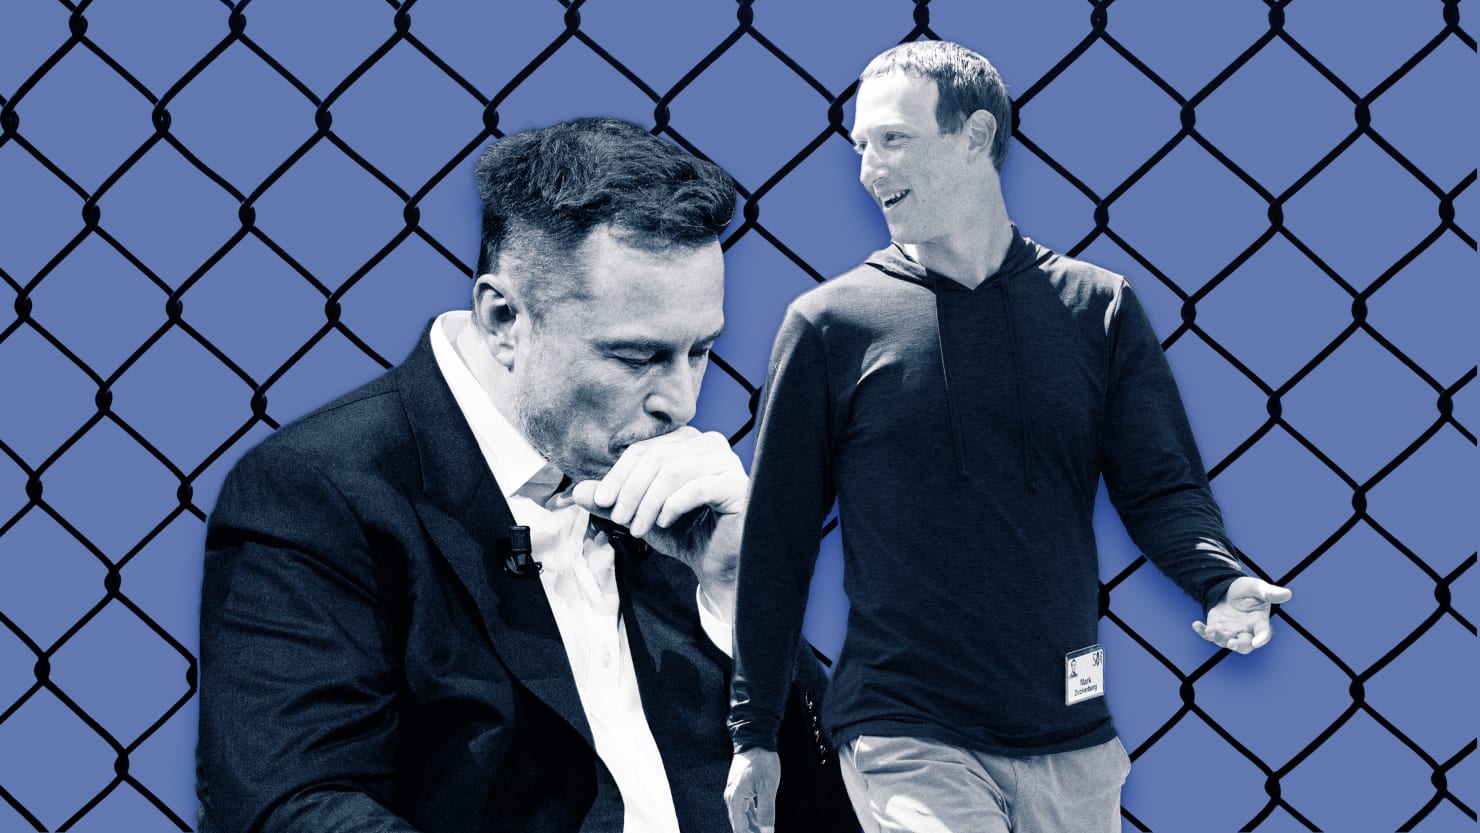 Mark Zuckerberg Challenges Elon Musk to a Battle-of-the Billionaires Cage Match